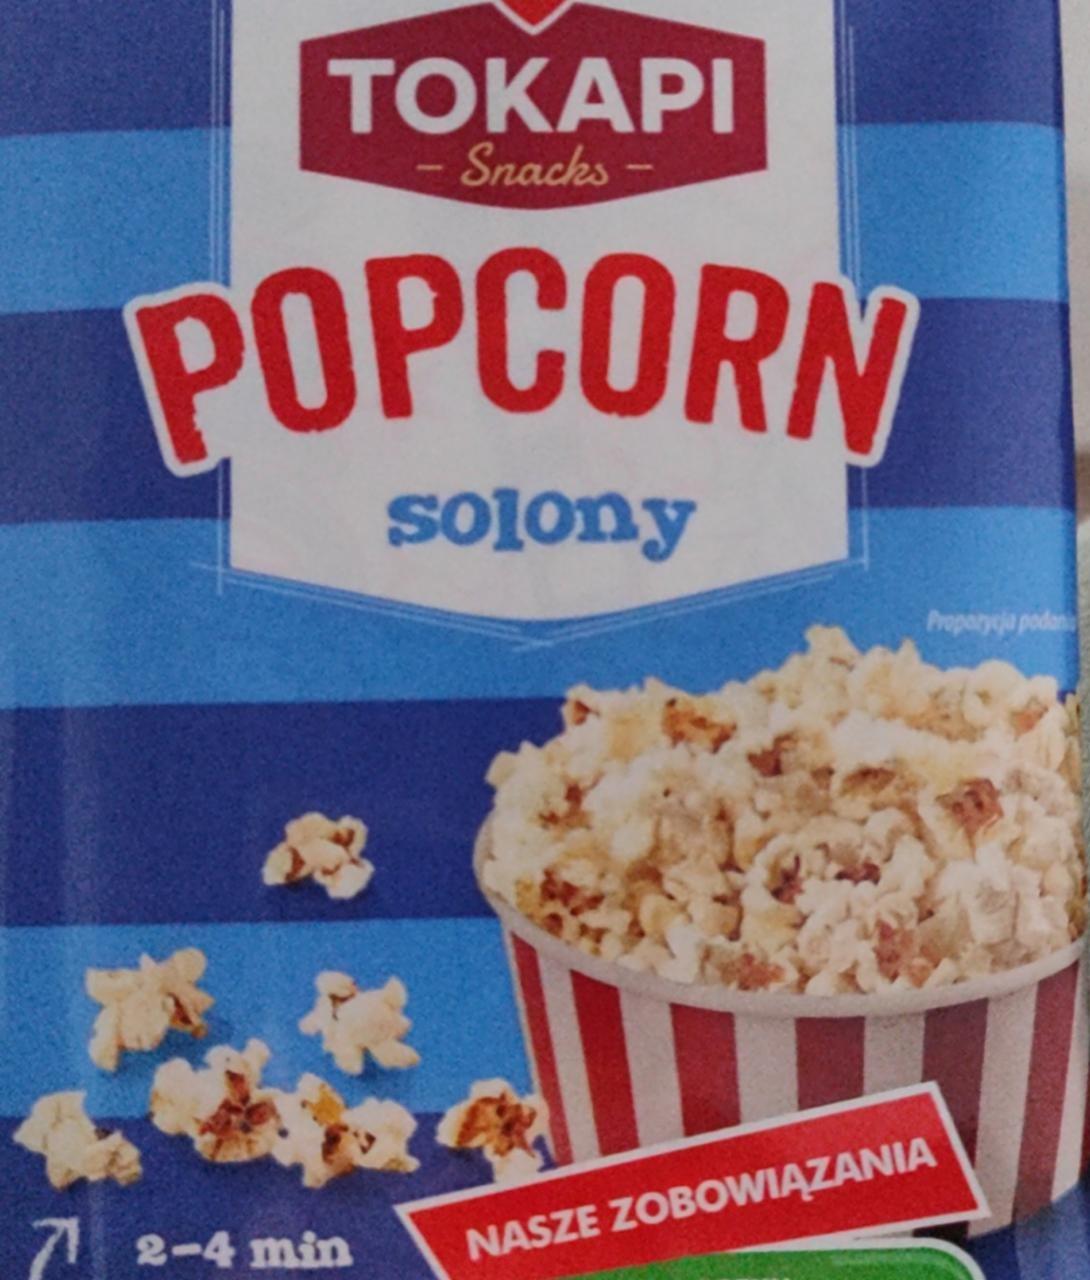 Zdjęcia - Popcorn solony Tokapi